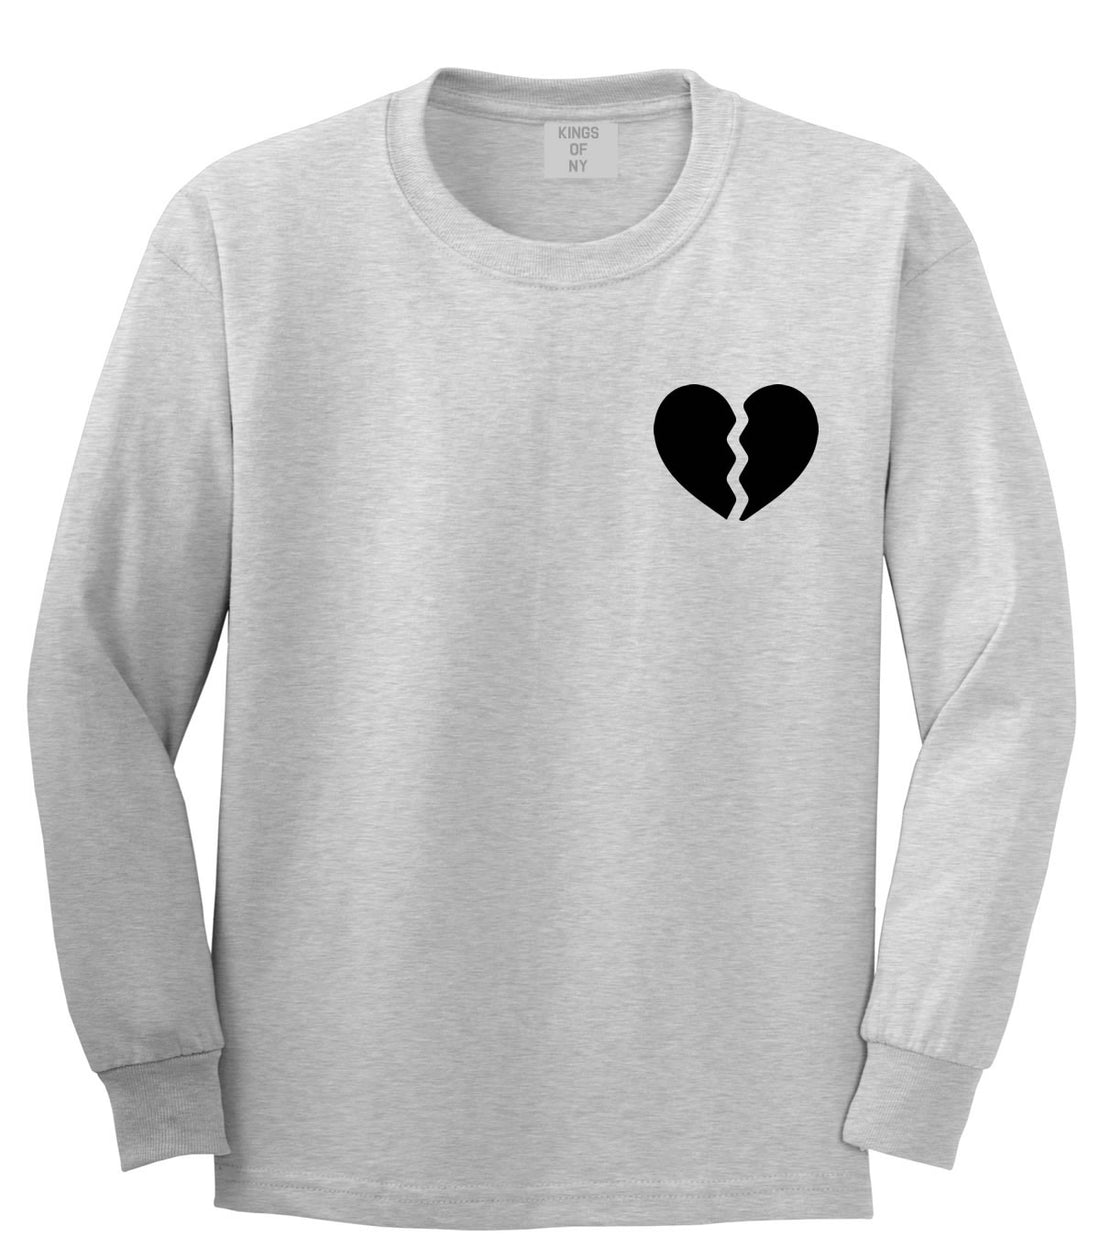 Broken Heart Long Sleeve T-Shirt by Kings Of NY